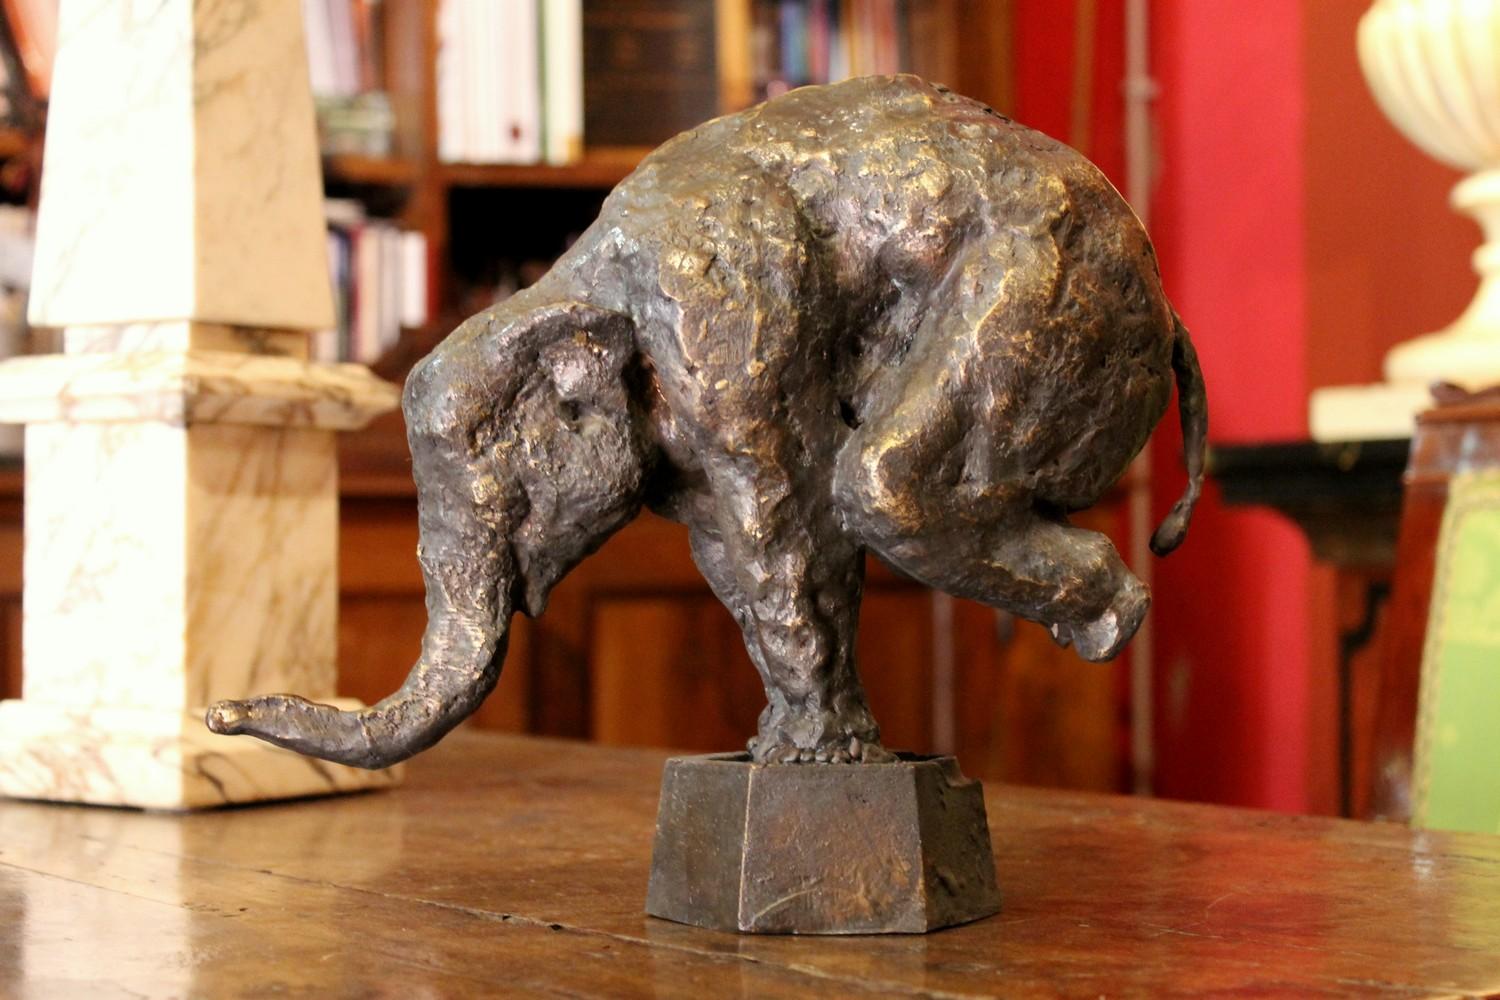 Elephant on Iron Pedestal, Lost Wax Casting Parcel-Gilt Patina Bronze Sculpture - Gold Still-Life Sculpture by Pablo Simunovic